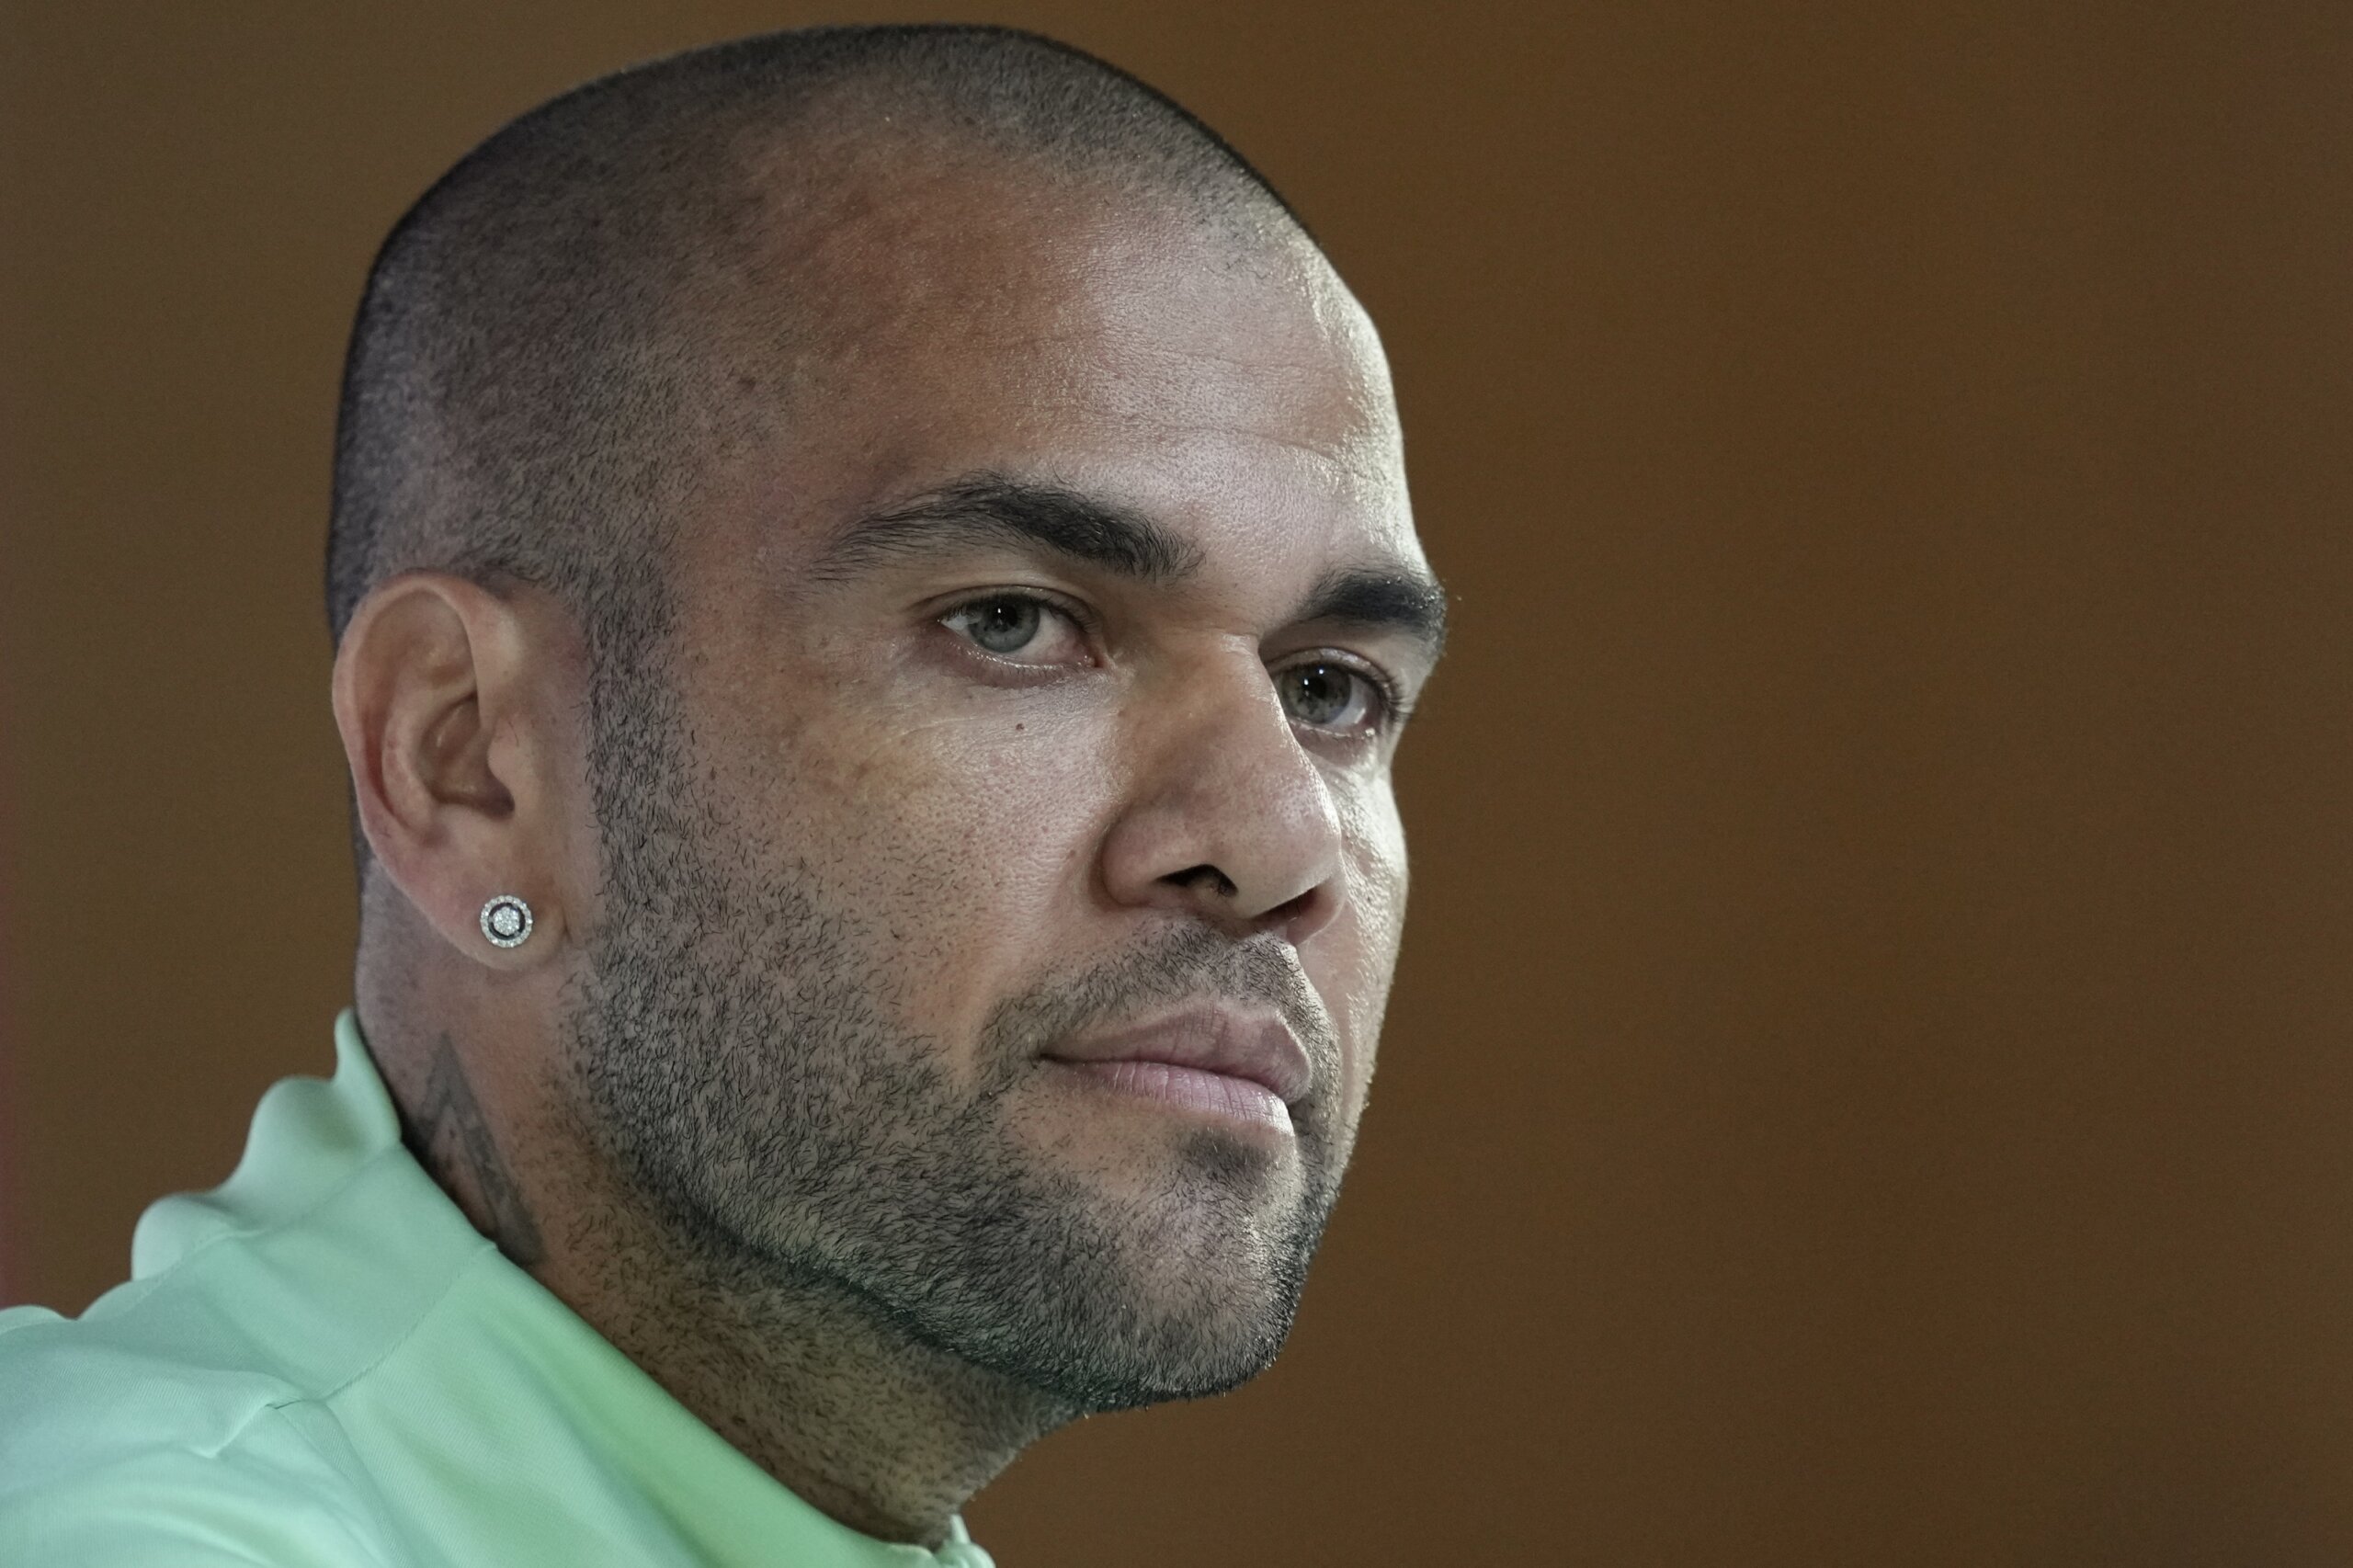 Report: Alleged victim won’t seek compensation from Alves